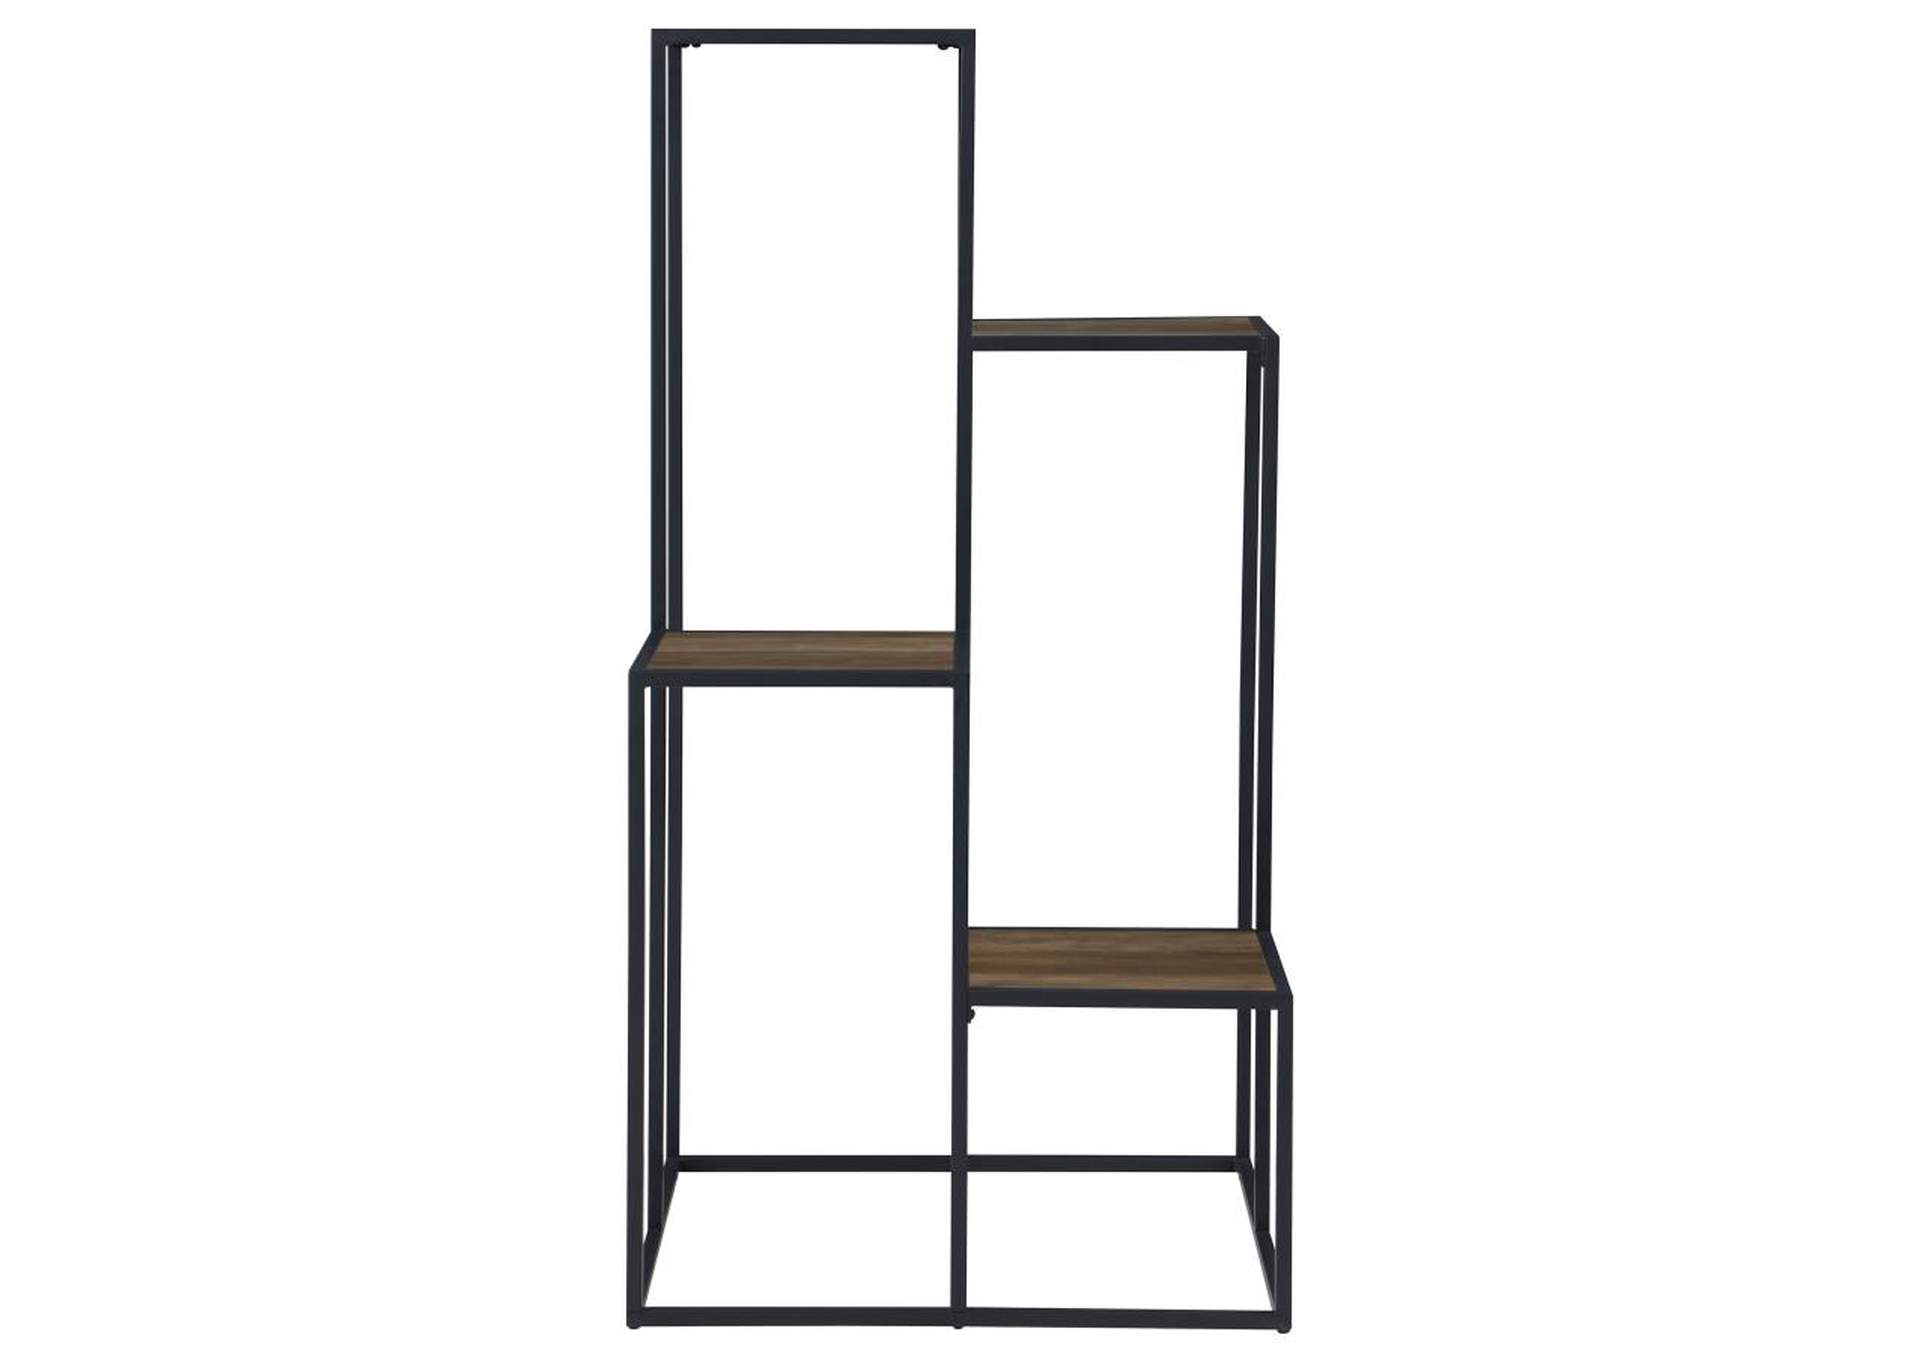 4-tier Display Shelf Rustic Brown and Black,Coaster Furniture